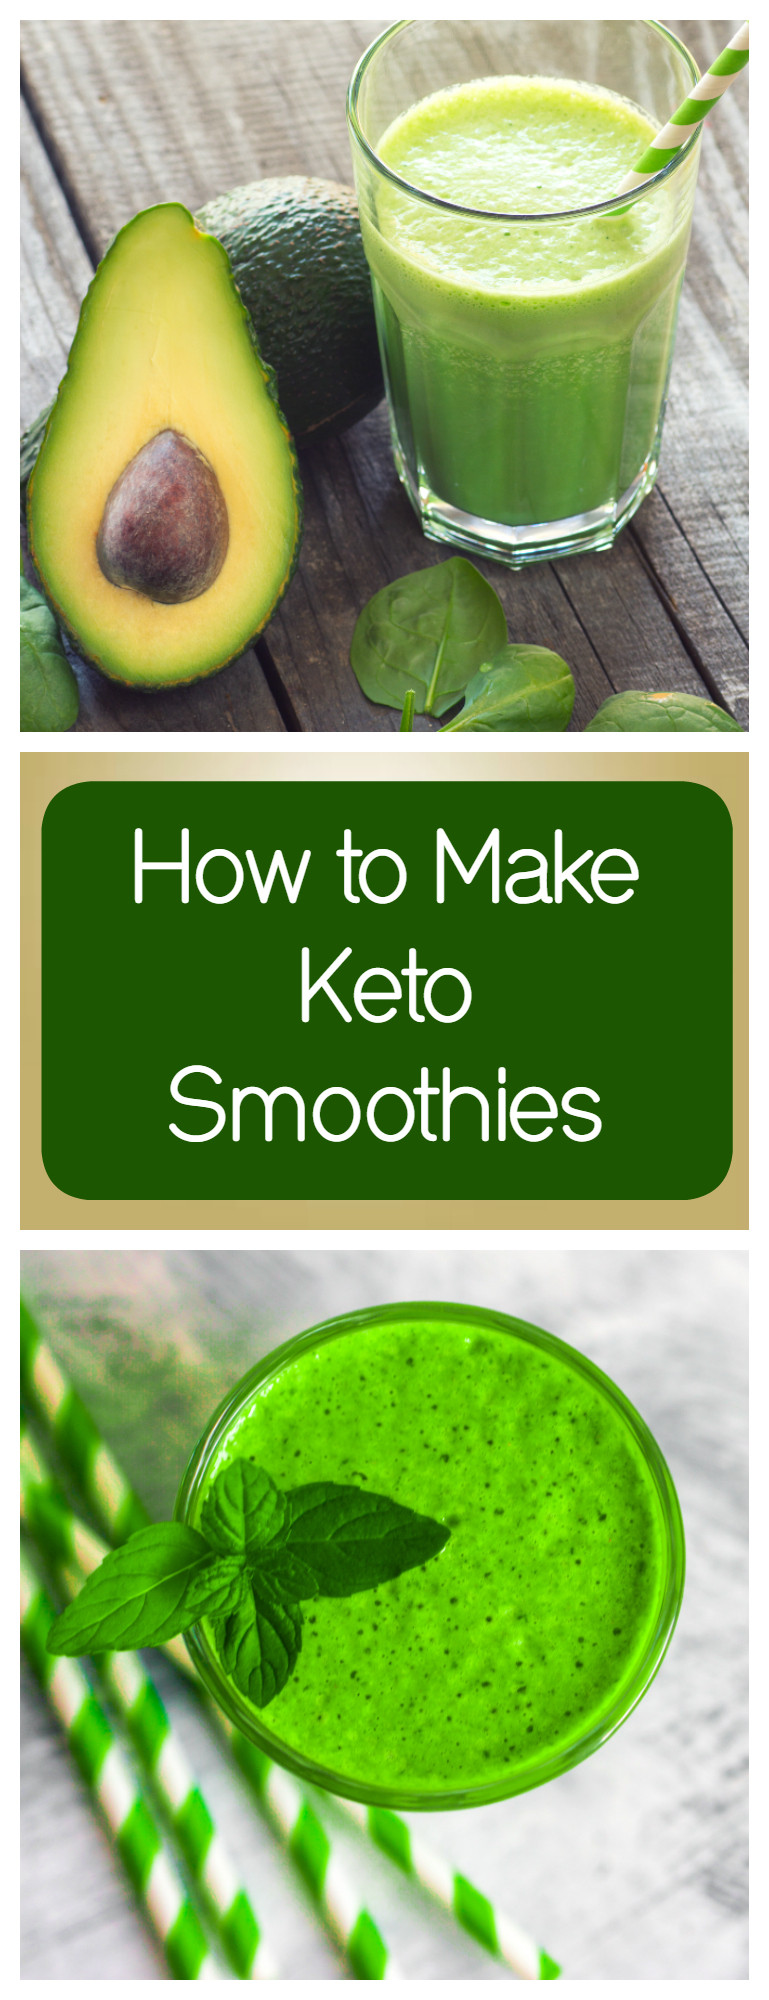 Keto Smoothie Recipes
 Formulating Low Carb Keto Smoothies All Nutribullet Recipes